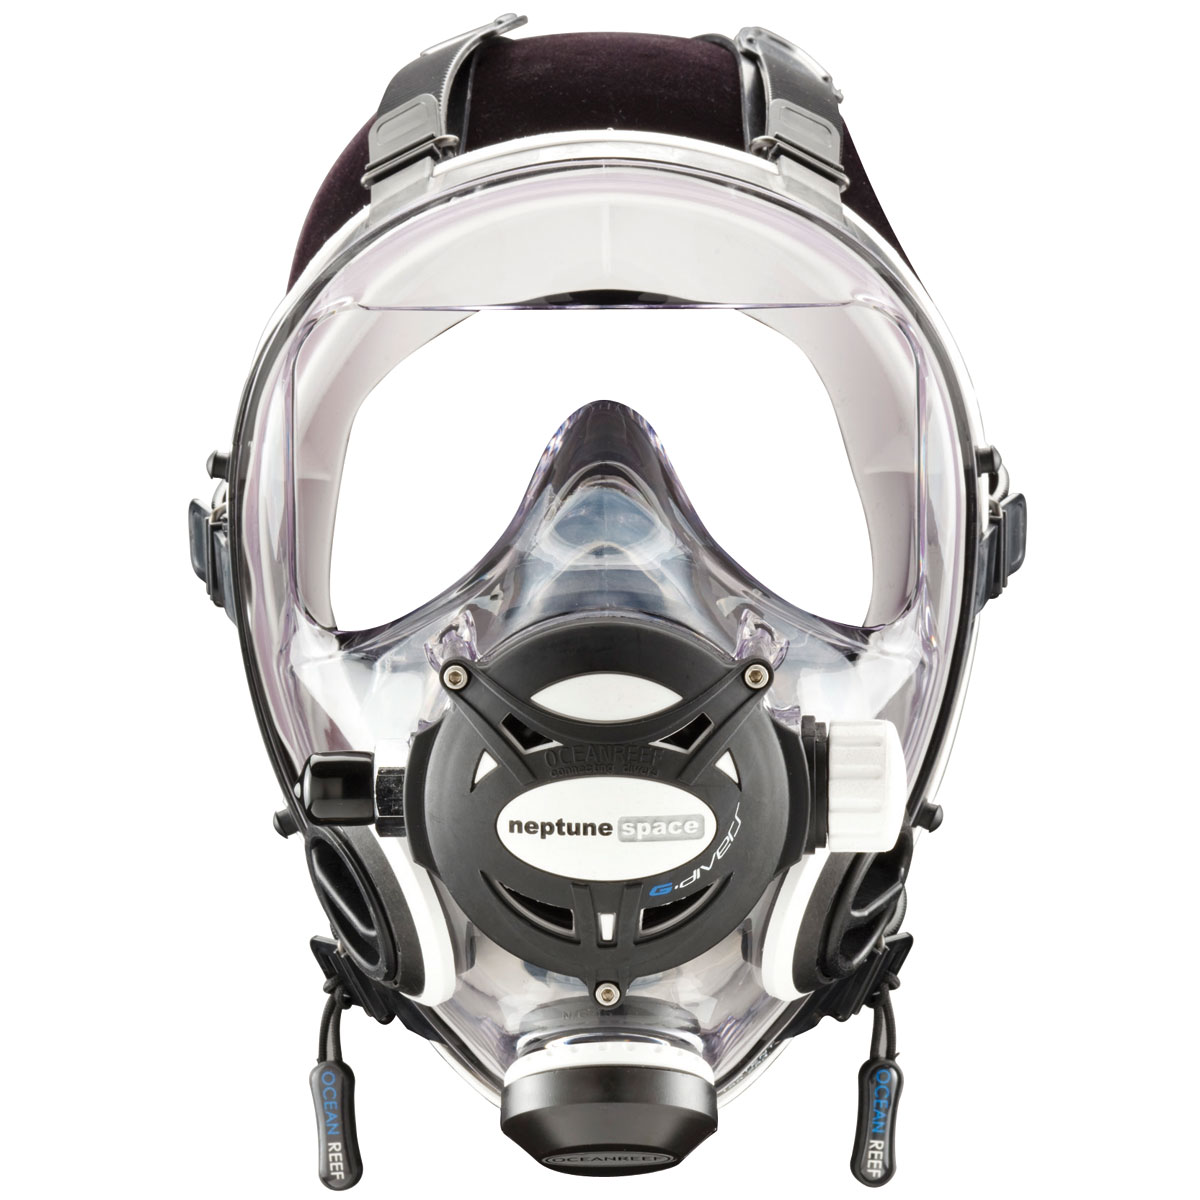 Ocean Reef Neptune Space G divers  Scuba  Mask  Dive  World